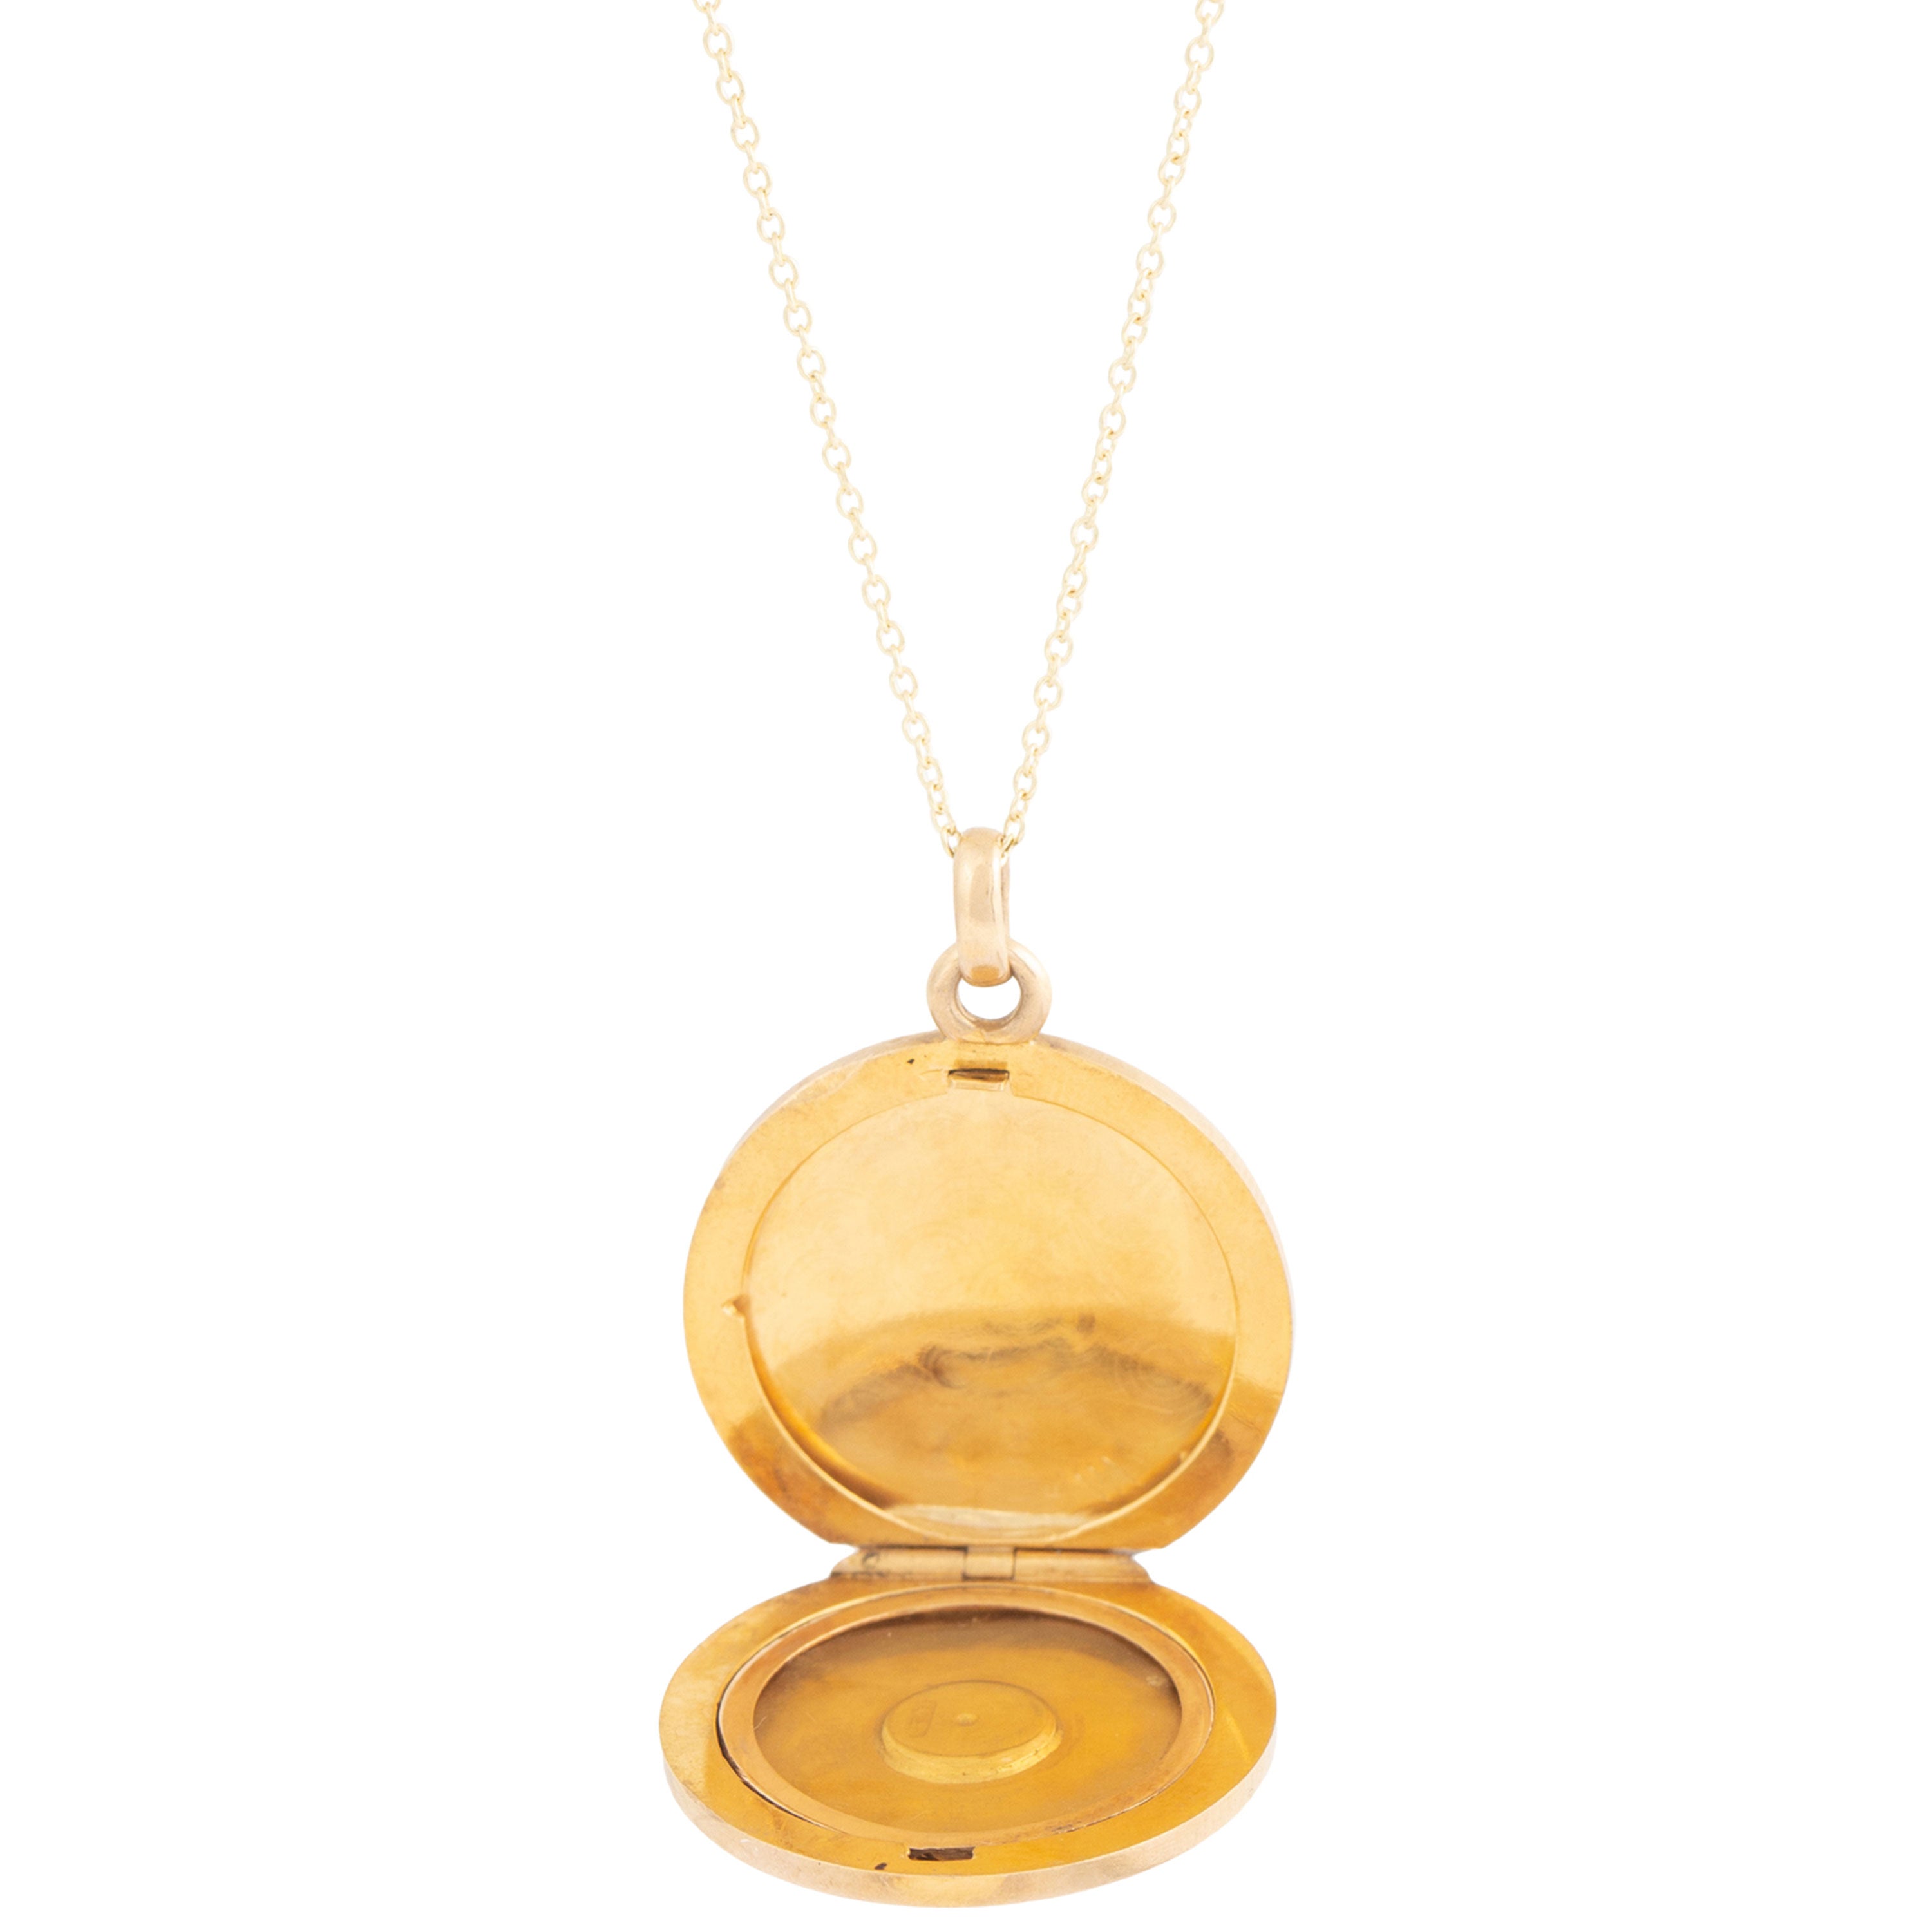 Circular 14k Gold Locket Necklace